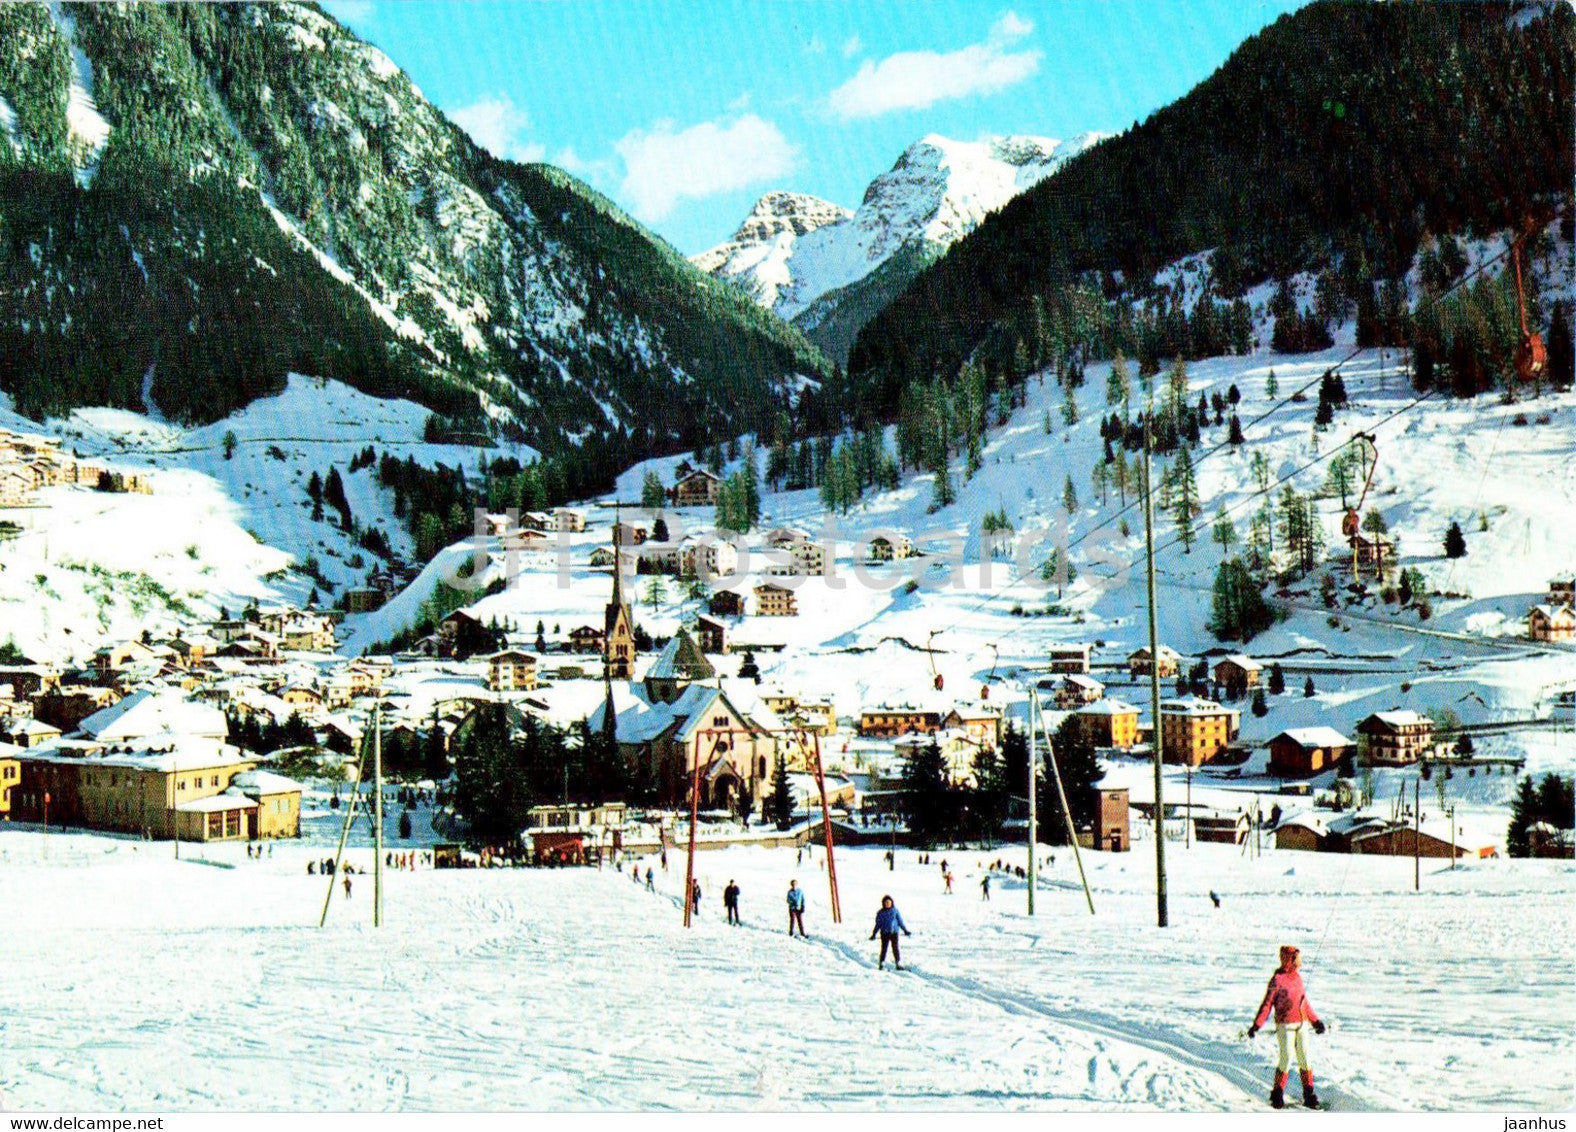 Moena 1200 m - Val di Fassa  - Dolomiti - Panorama verso Passo S Pellegrino - 1971 - Italy - used - JH Postcards